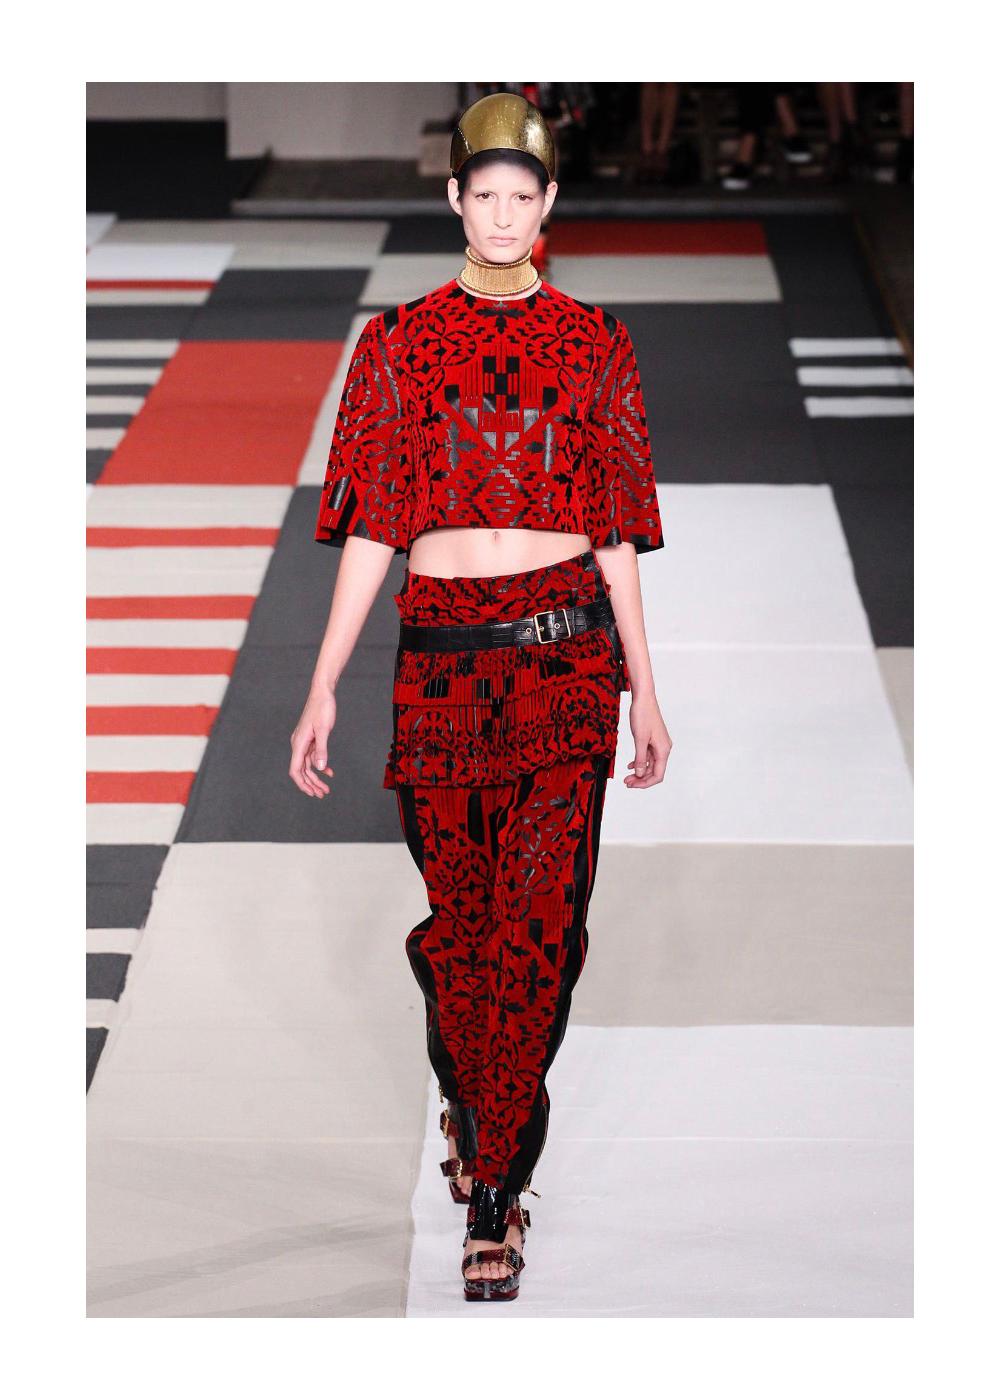 Women's ALEXANDER McQUEEN S/S 2014 Red Black Mosaic Shape Print Fit N Flare Skater Dress